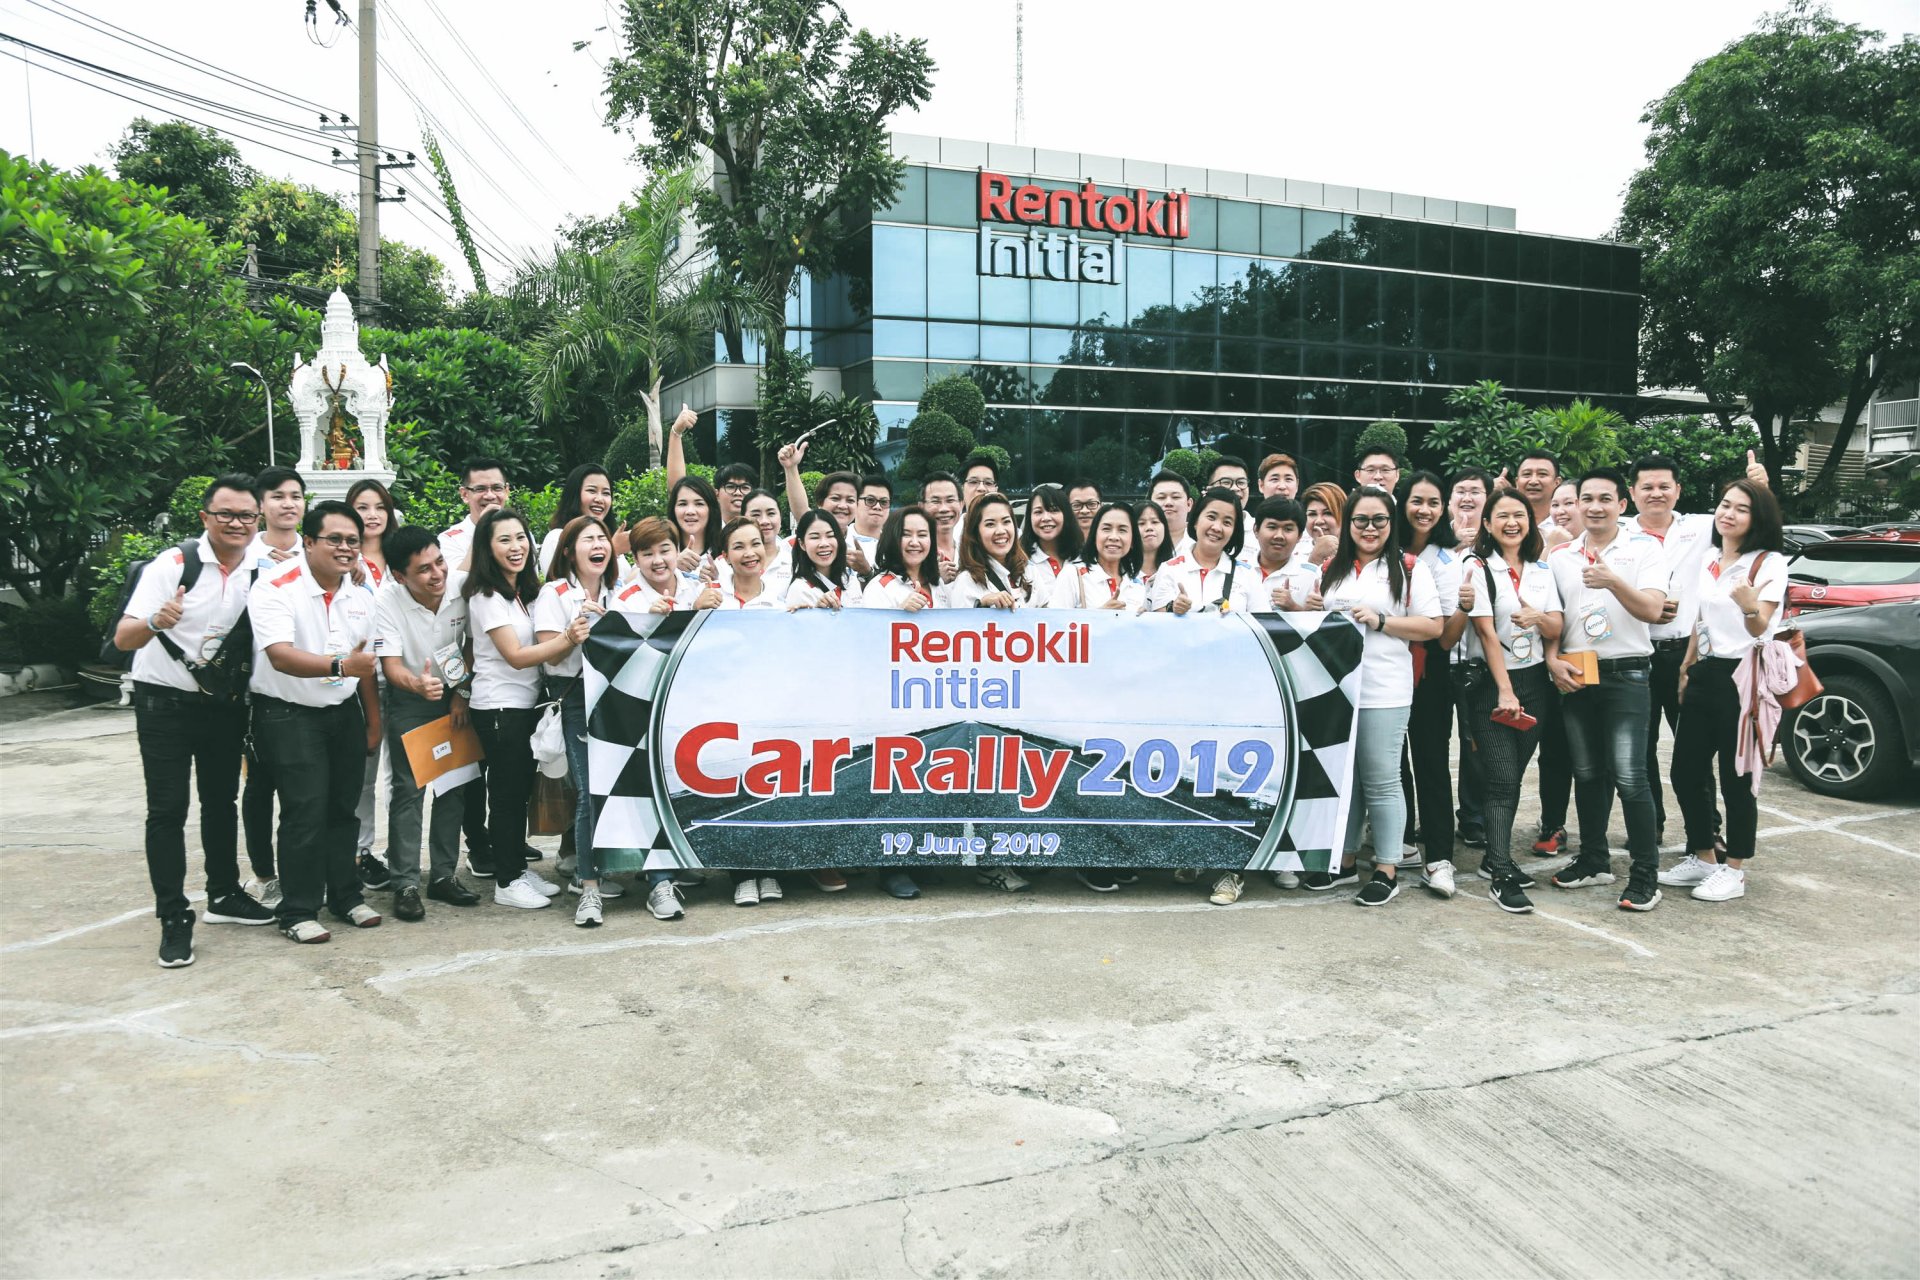 Rentokil Car Rally & Sportday 2019